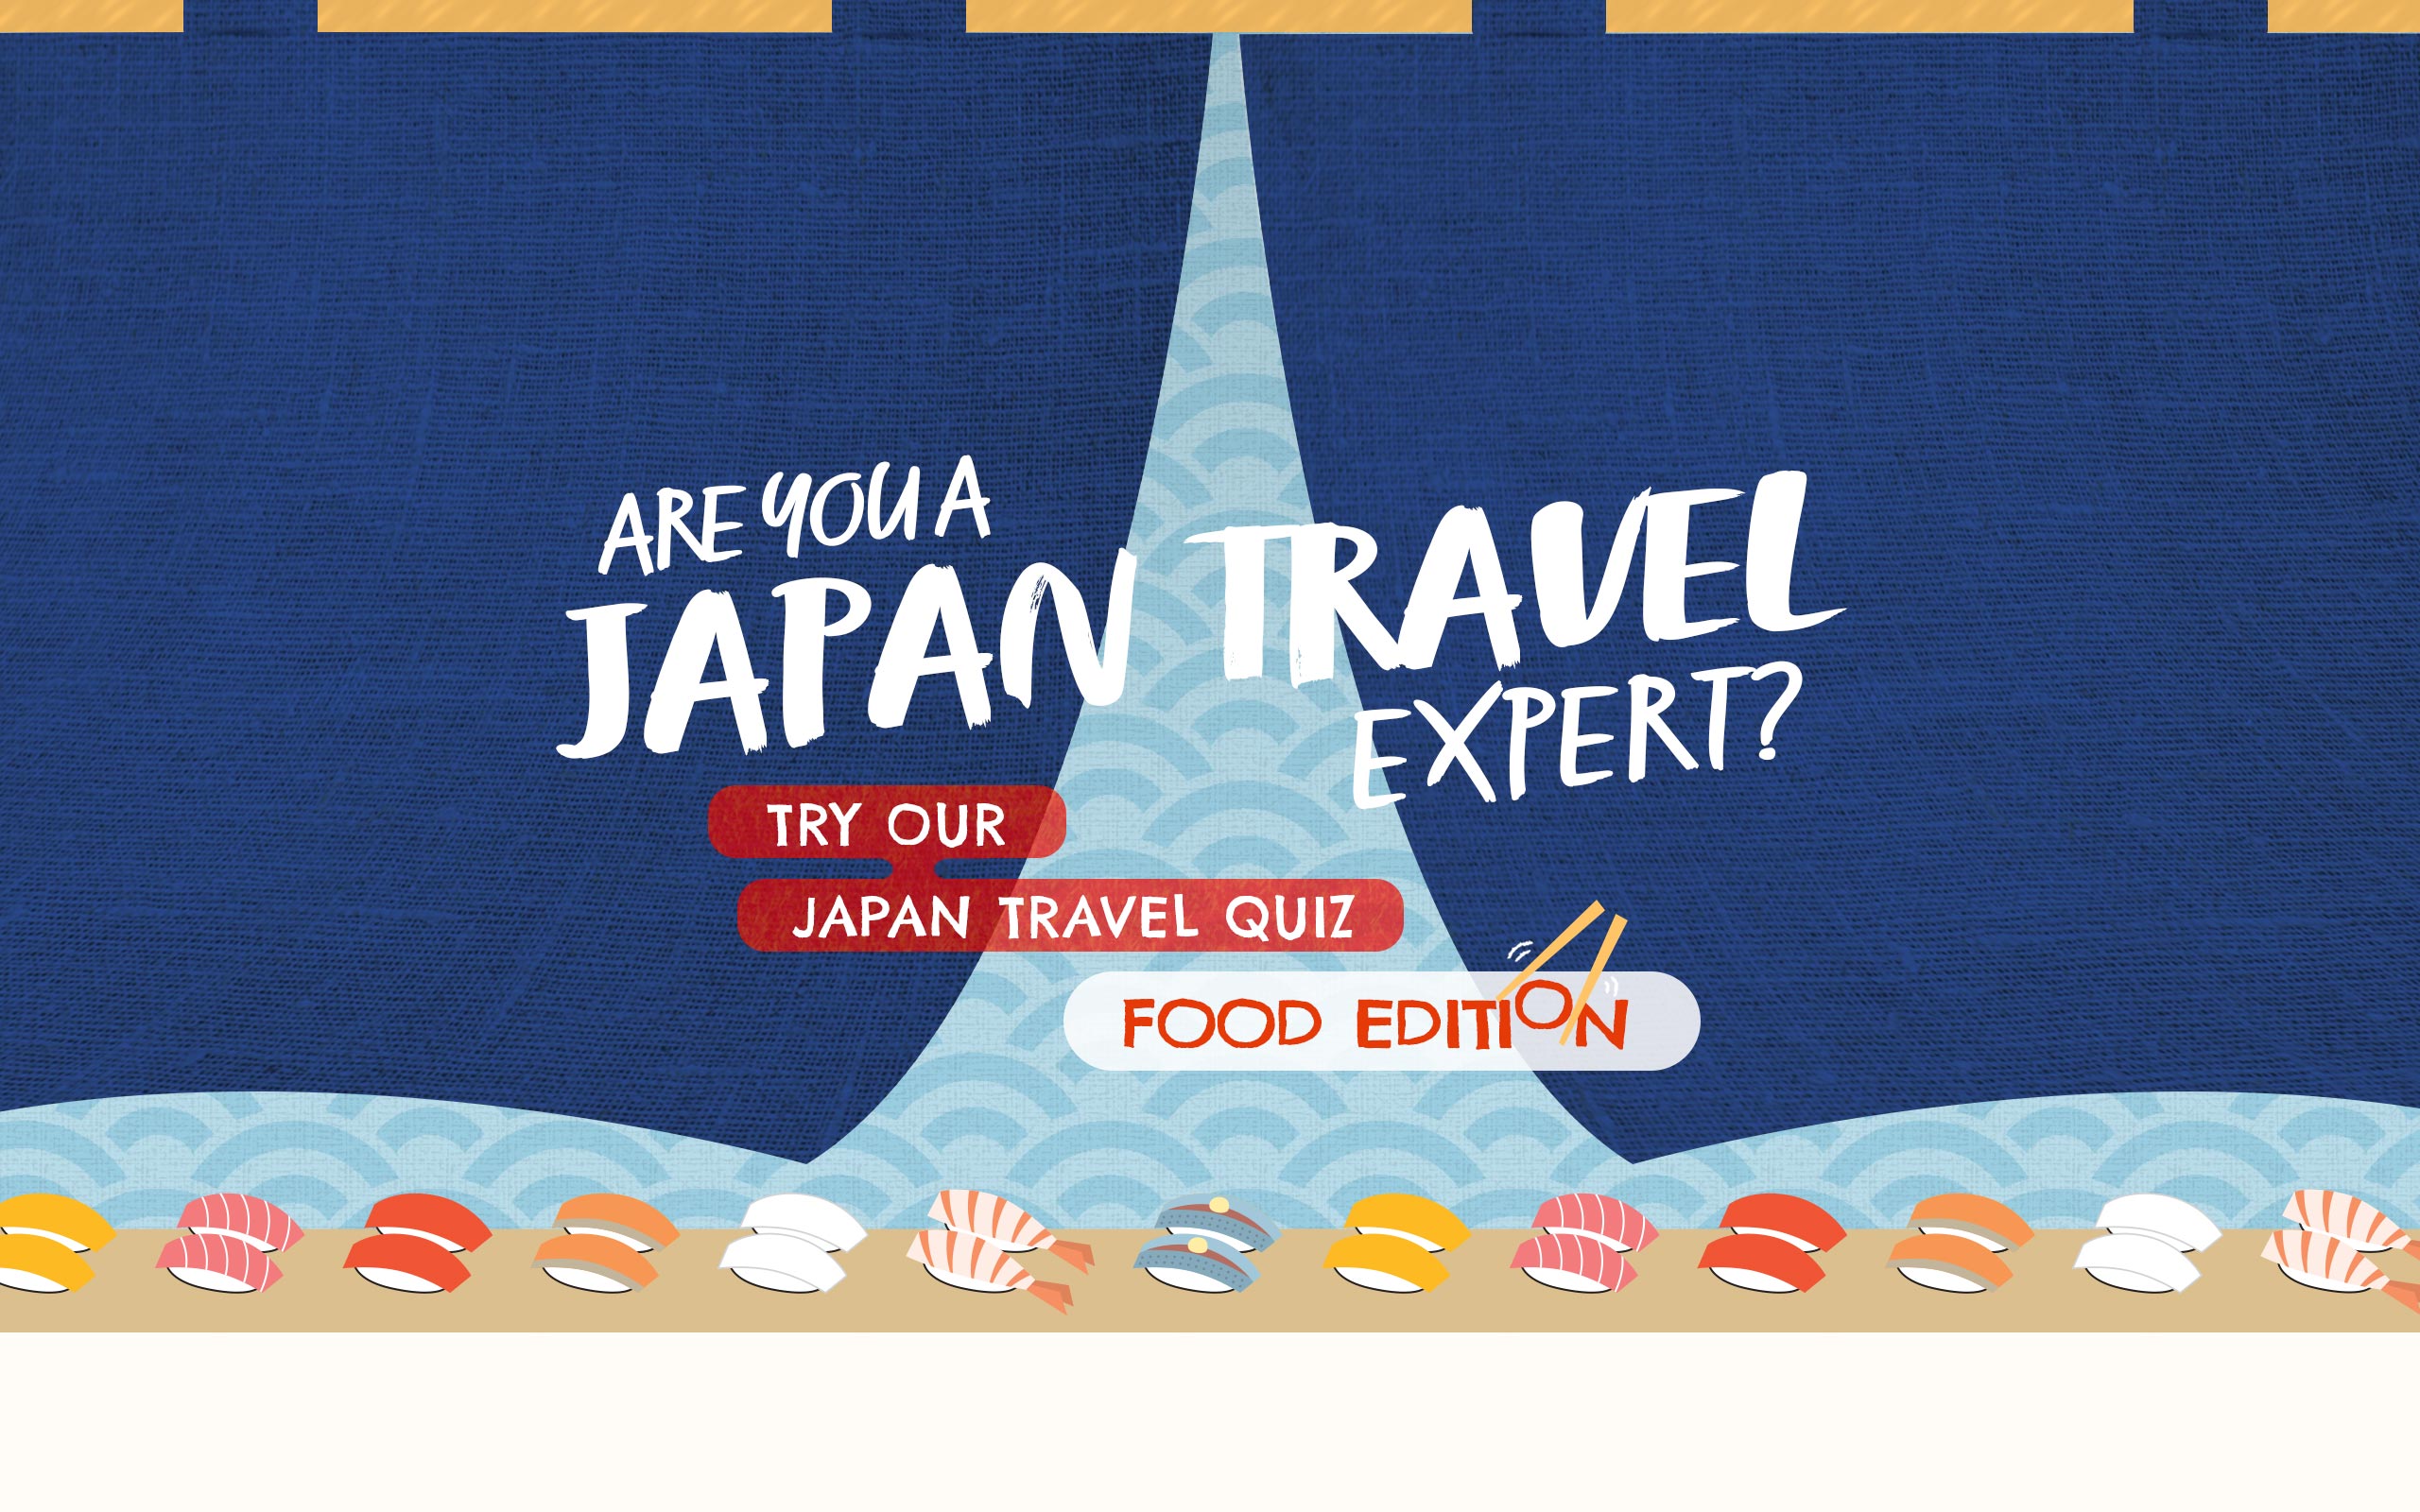 Japan travel quiz